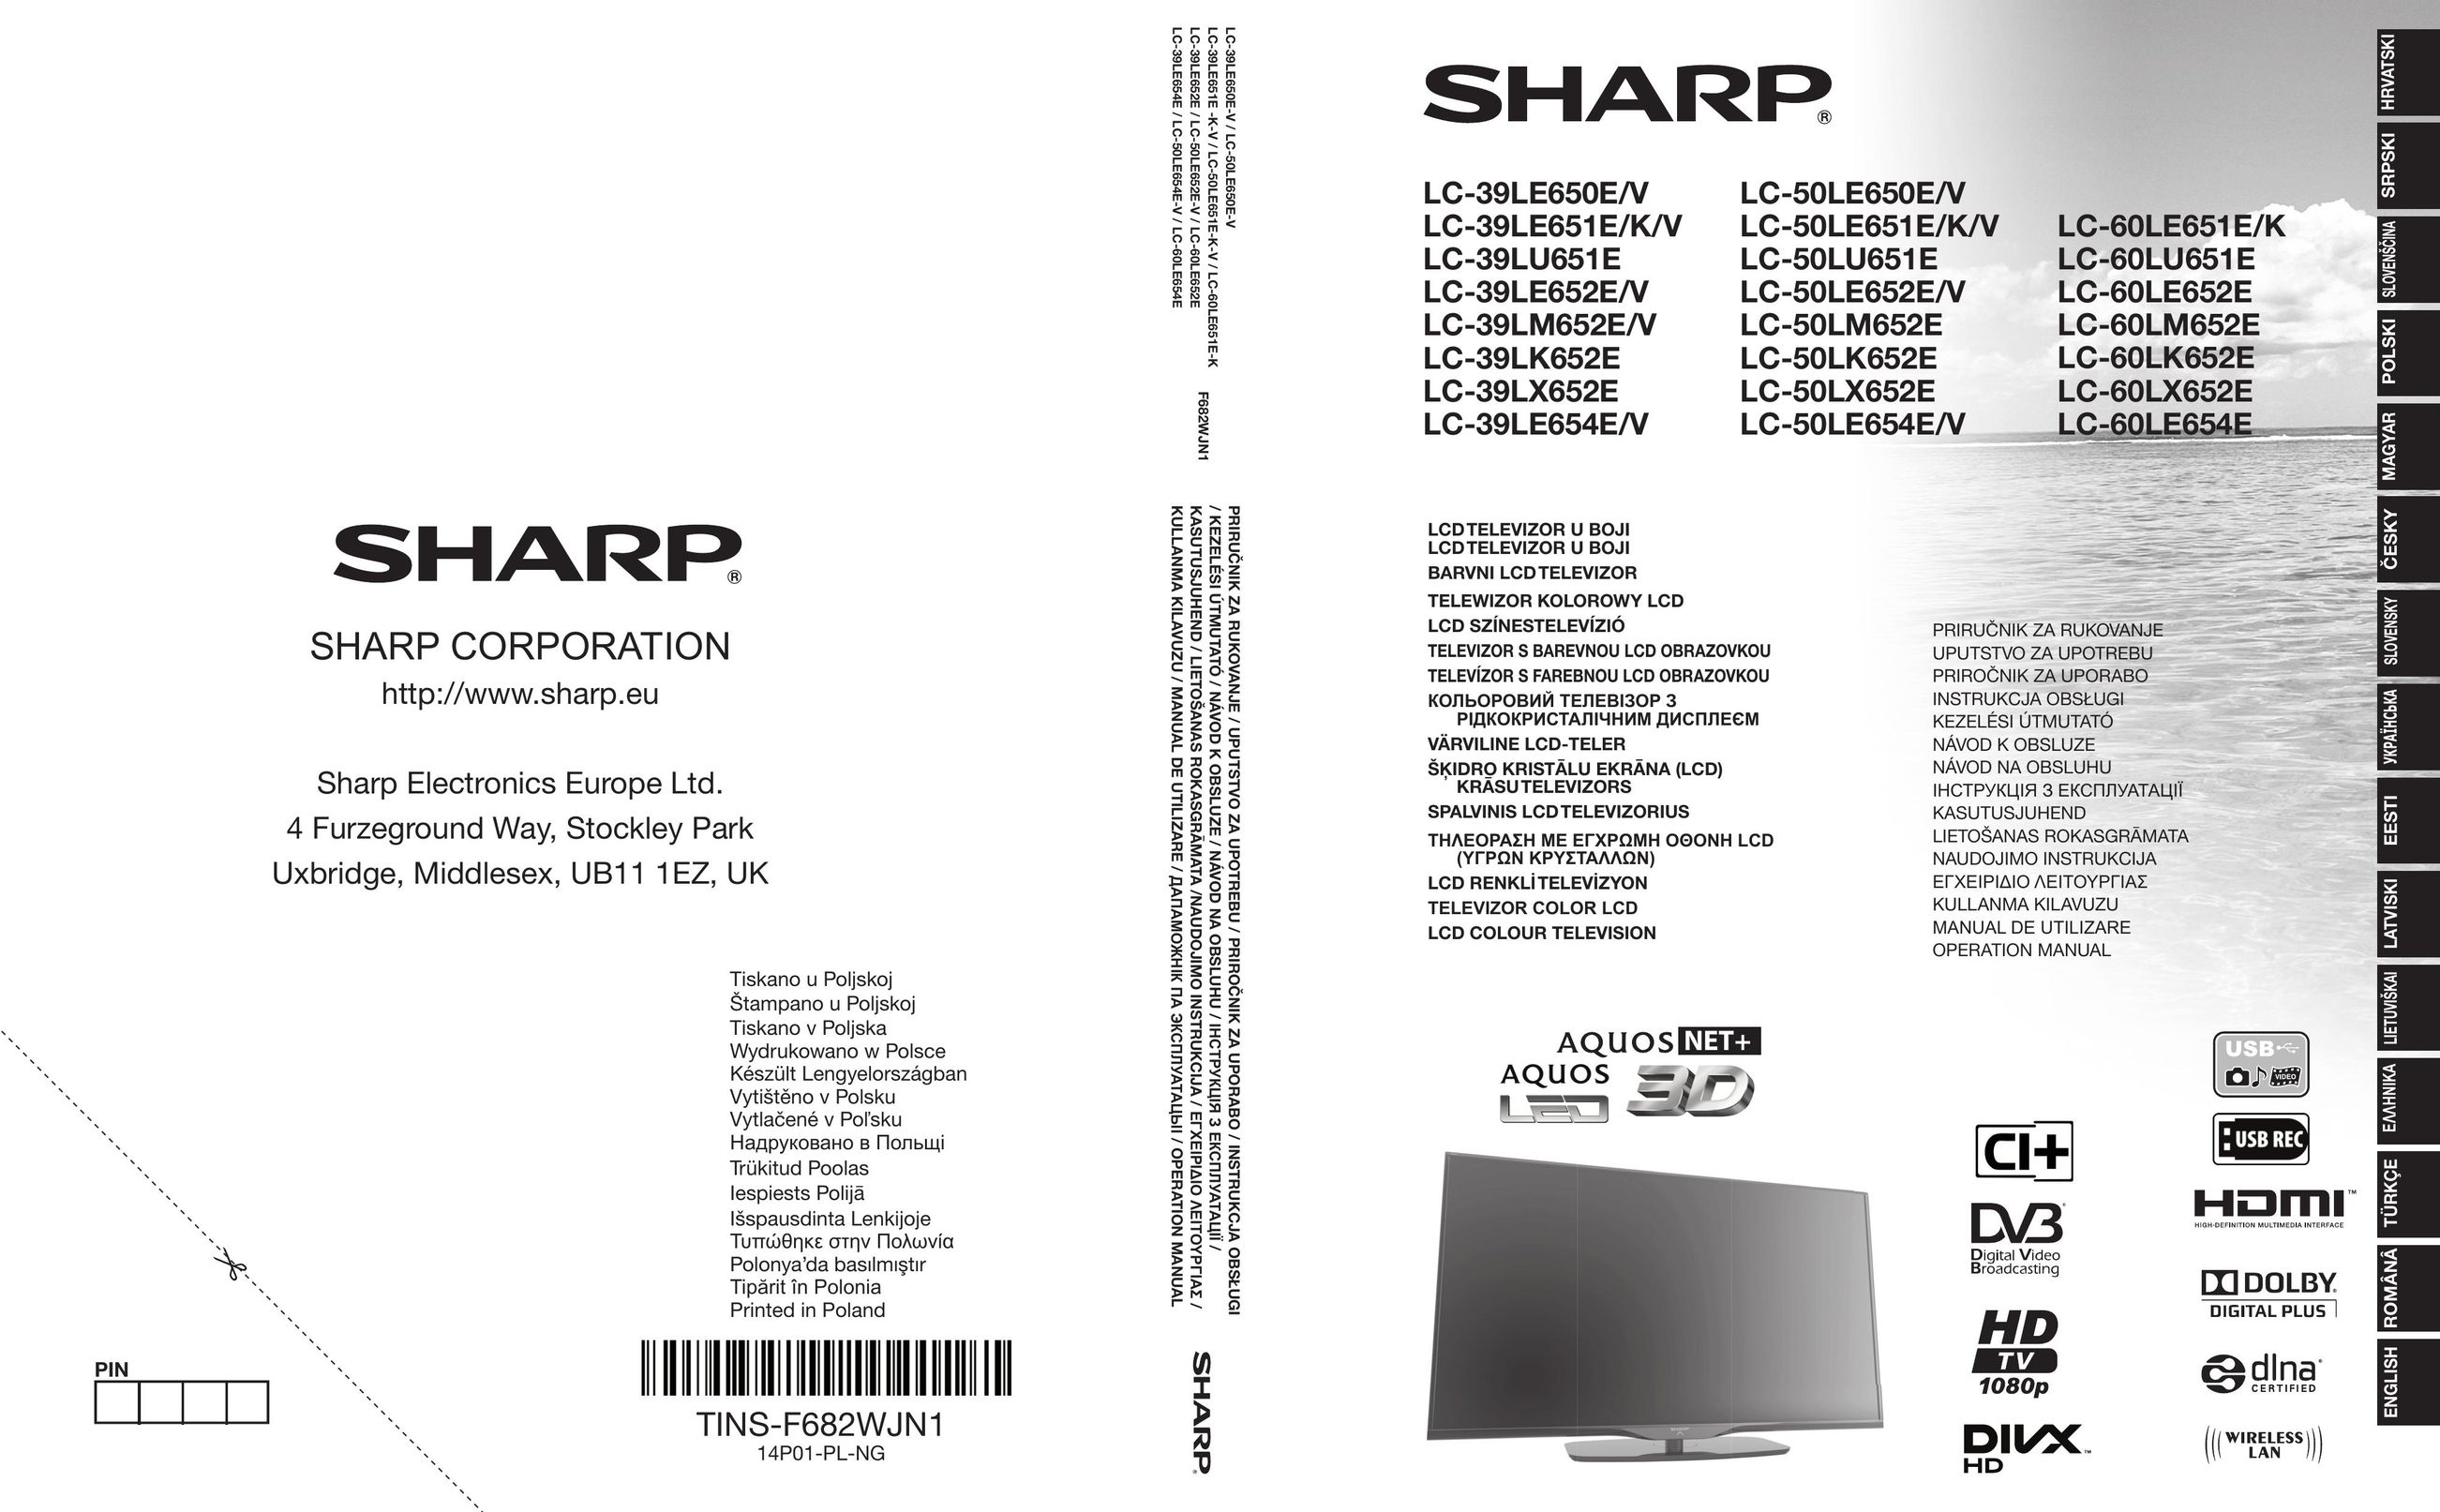 Sharp LC-60LX652E Car Video System User Manual